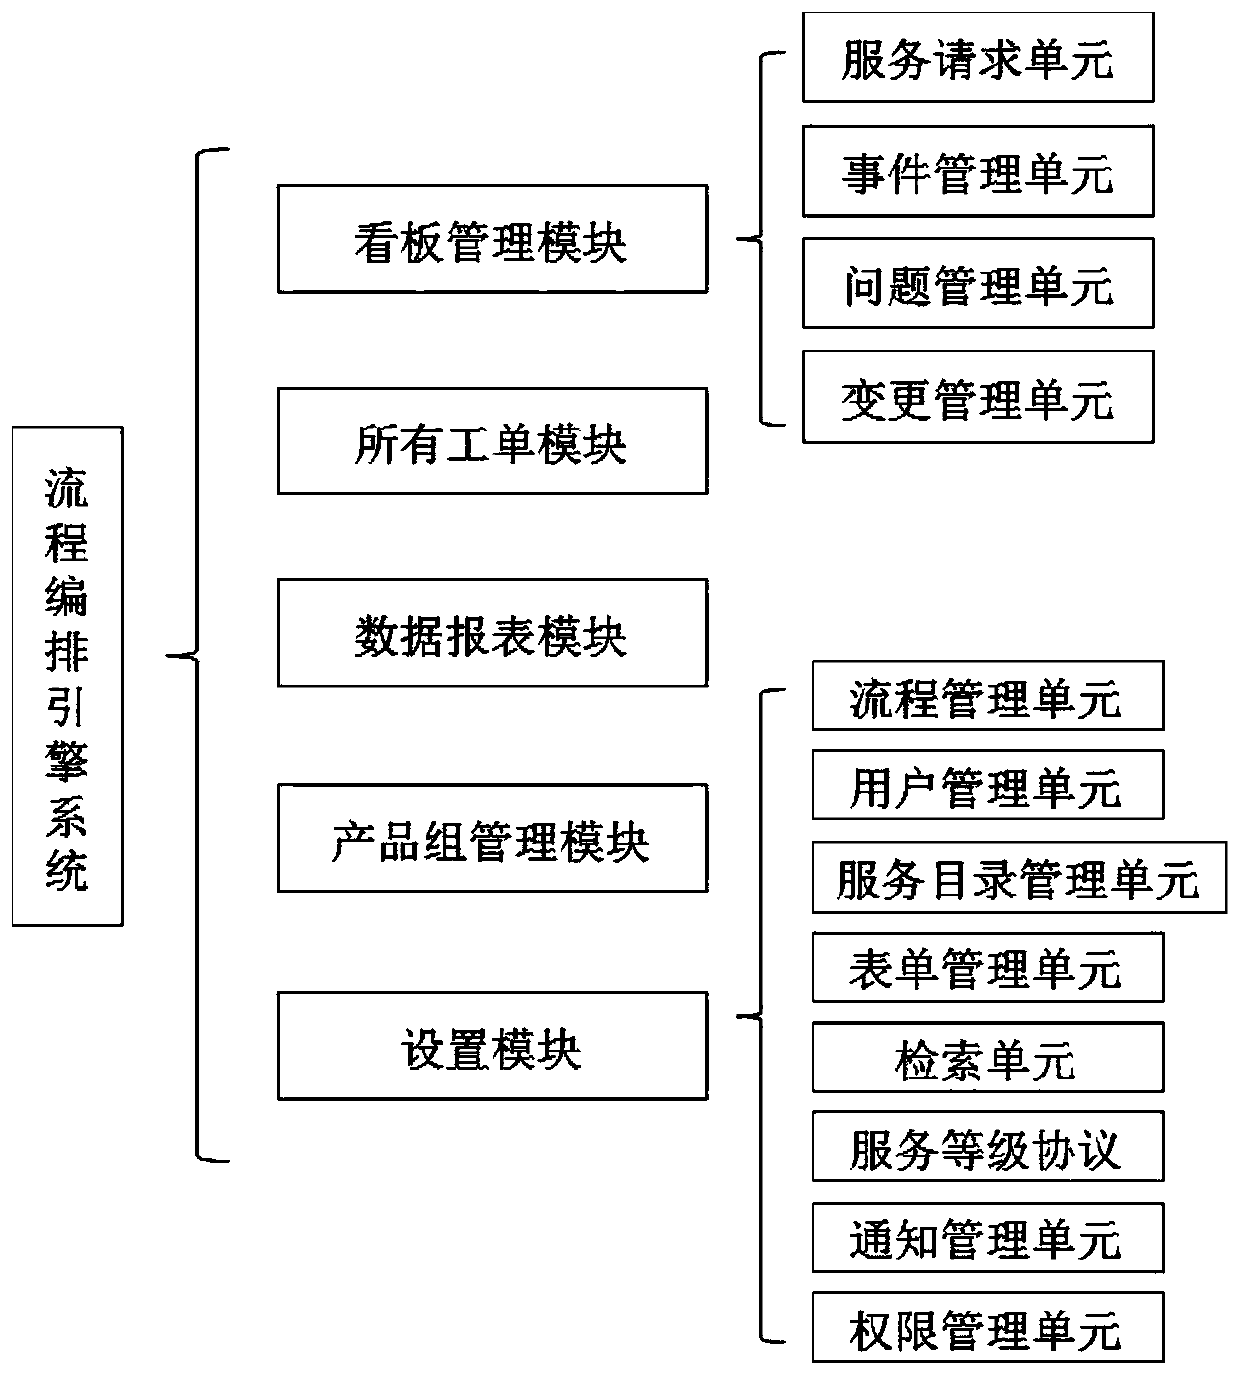 Process arrangement engine system